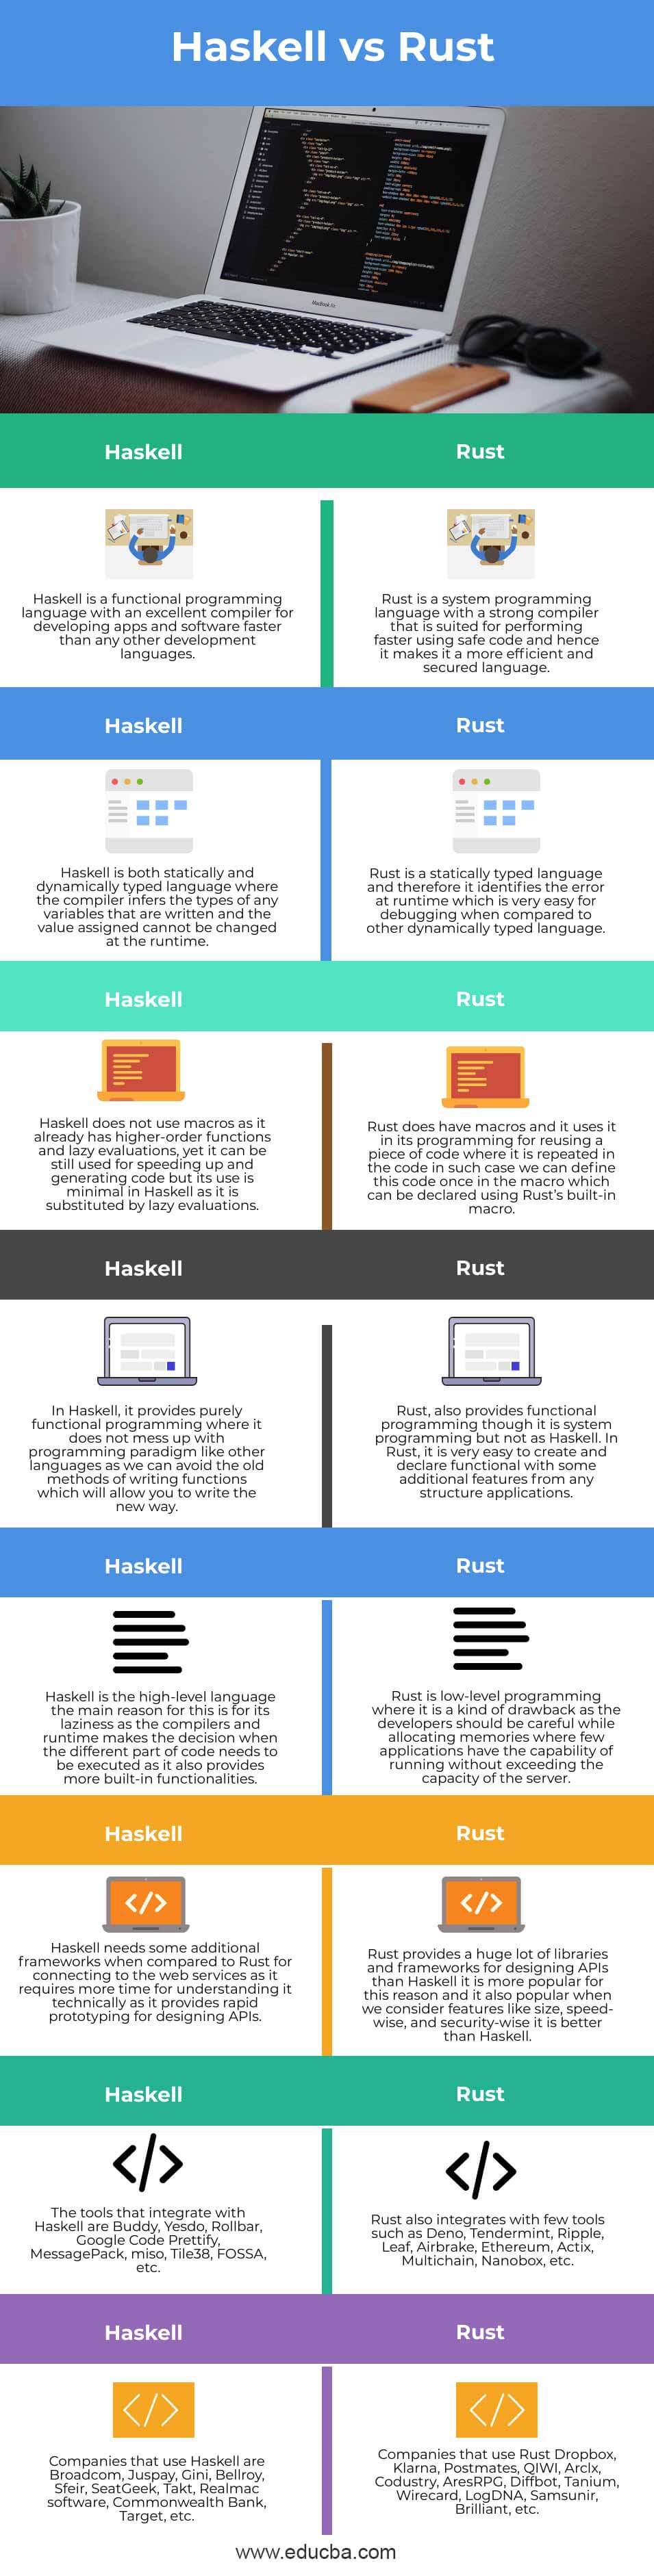 Haskell-vs-Rust-info